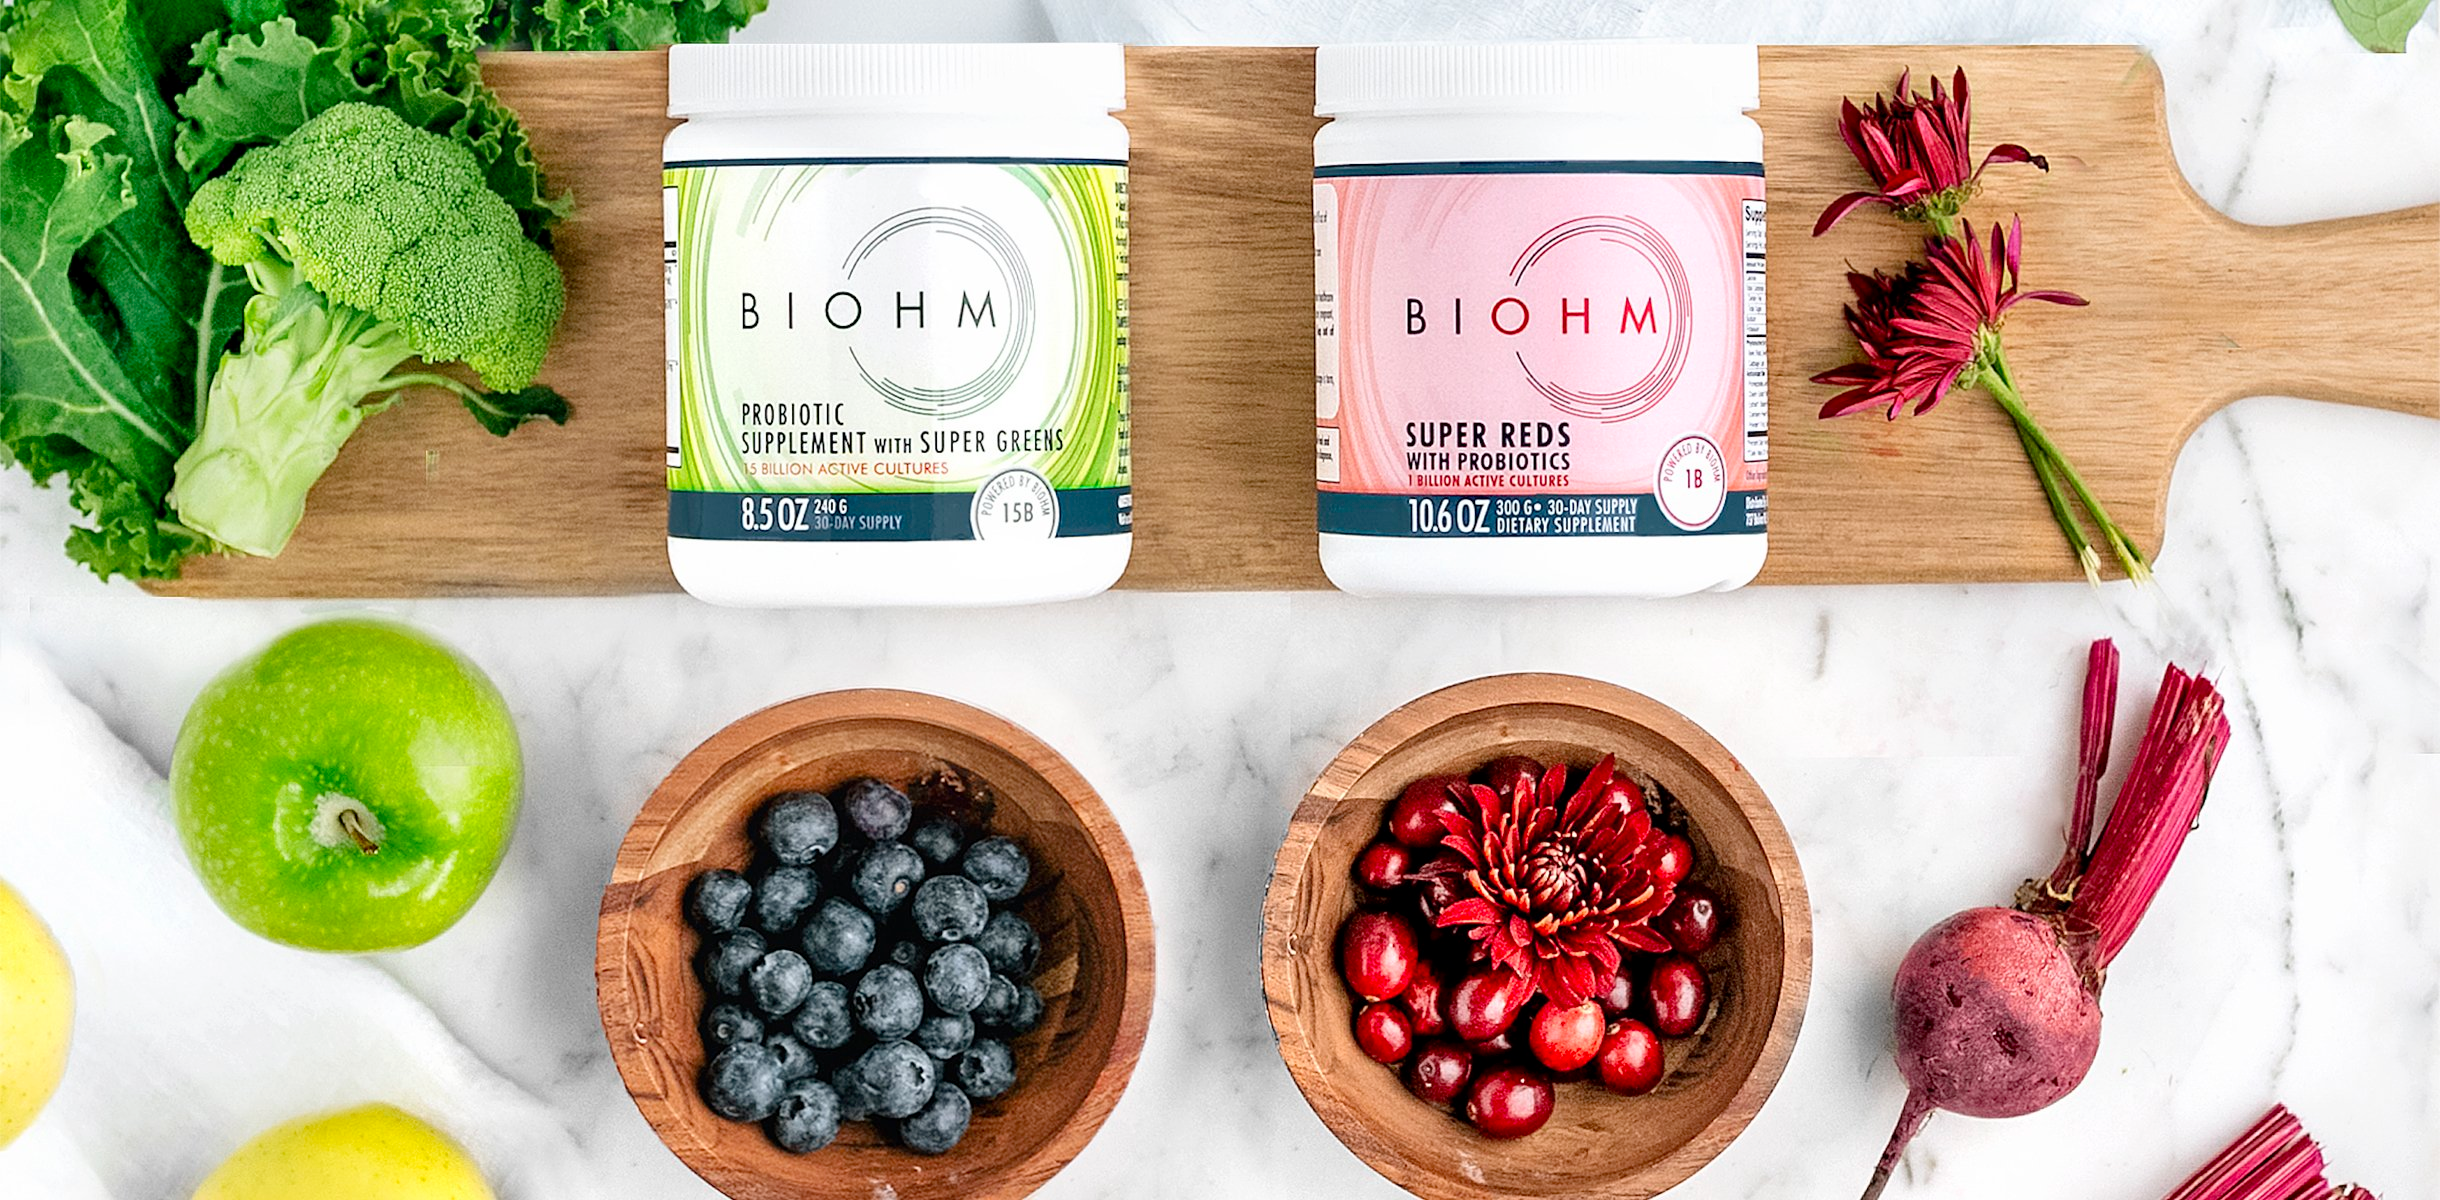 BIOHM supplement products